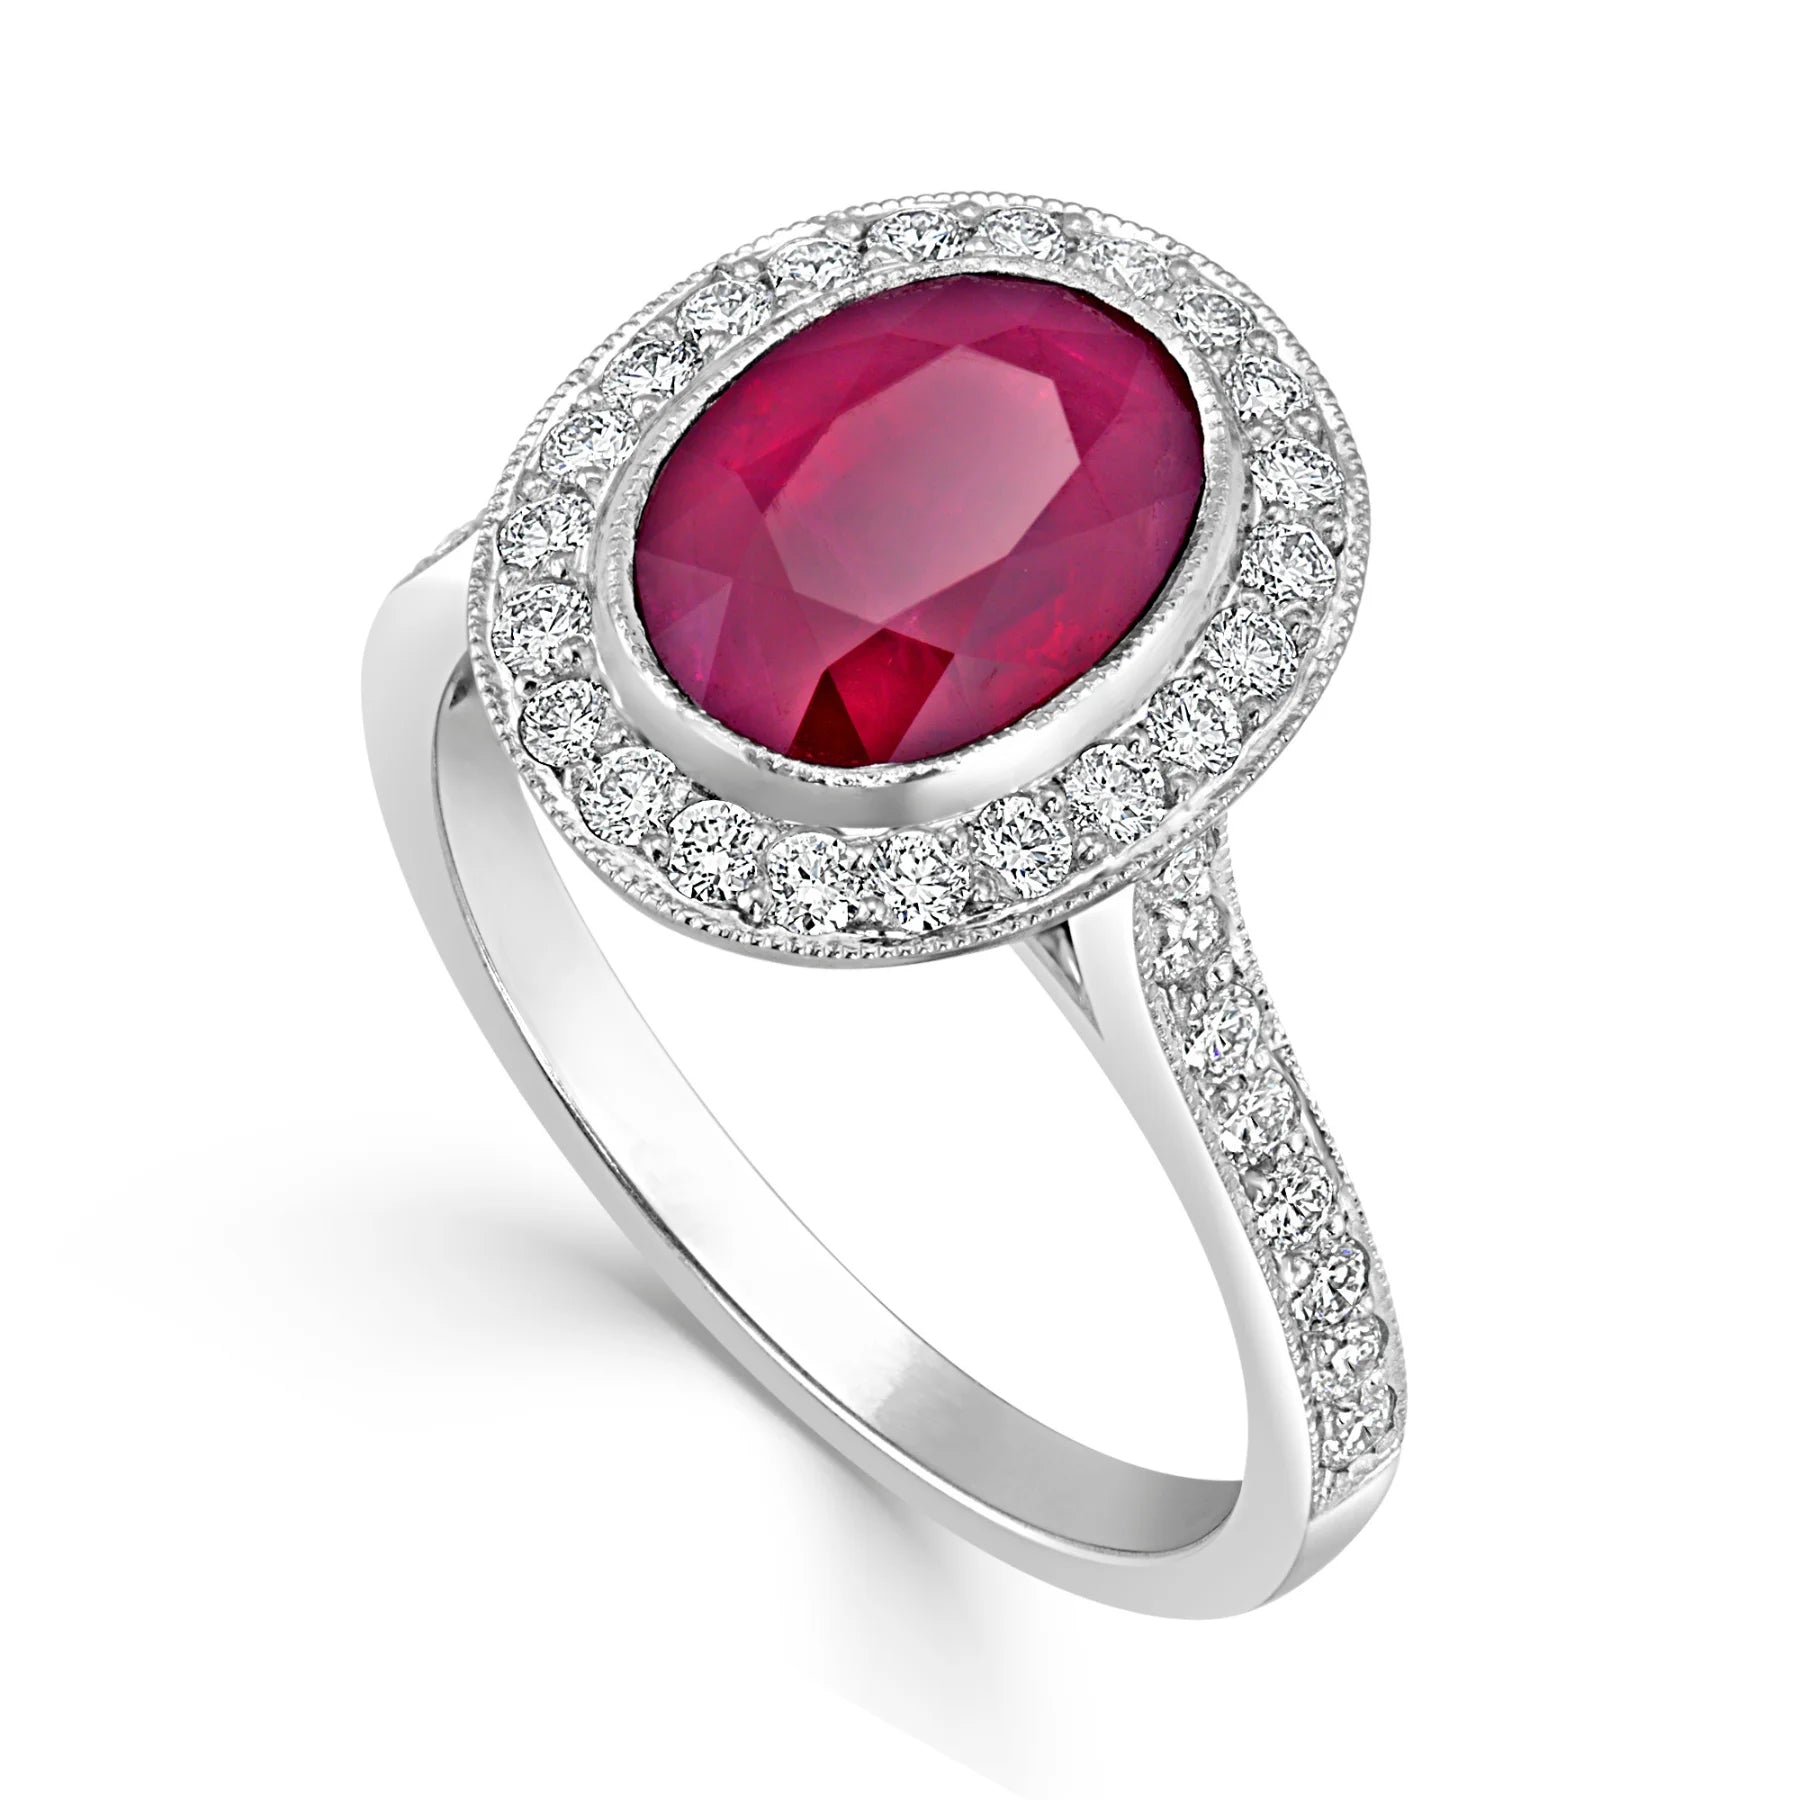 A 1940s platinum/iridium ruby and diamond ring - James Alfredson